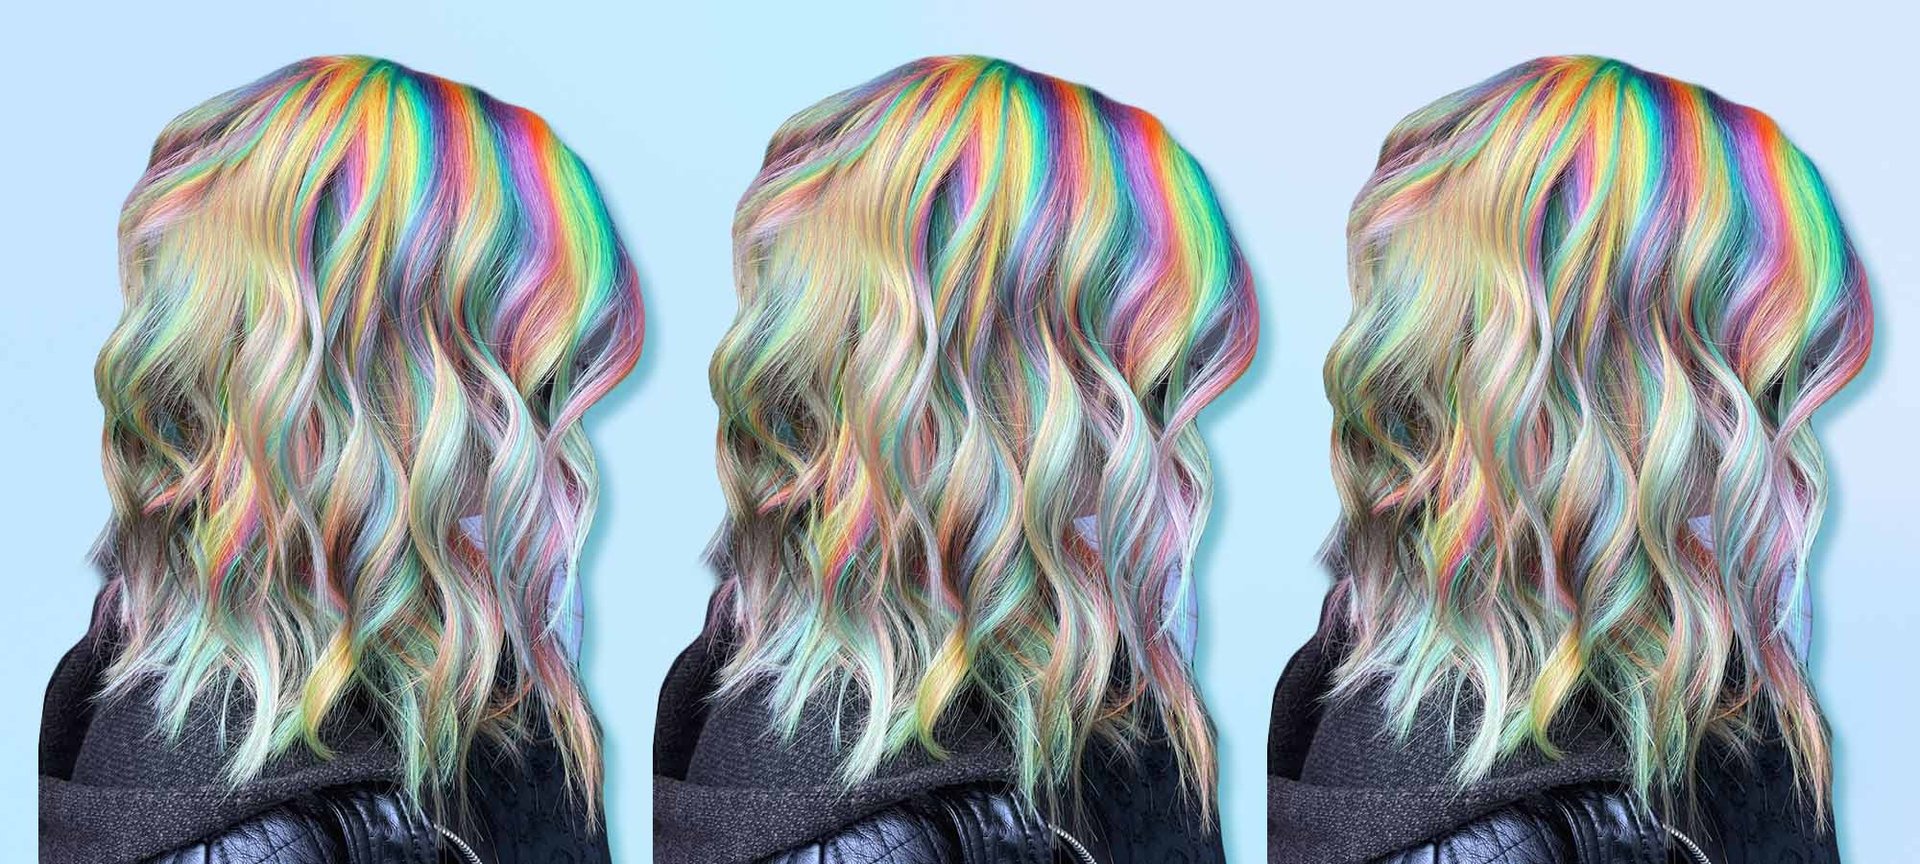 https://www.lorealparisusa.com/-/media/project/loreal/brand-sites/oap/americas/us/beauty-magazine/2022/november/11-30/rainbow-colored-hair/rainbow-colored-hair.jpg